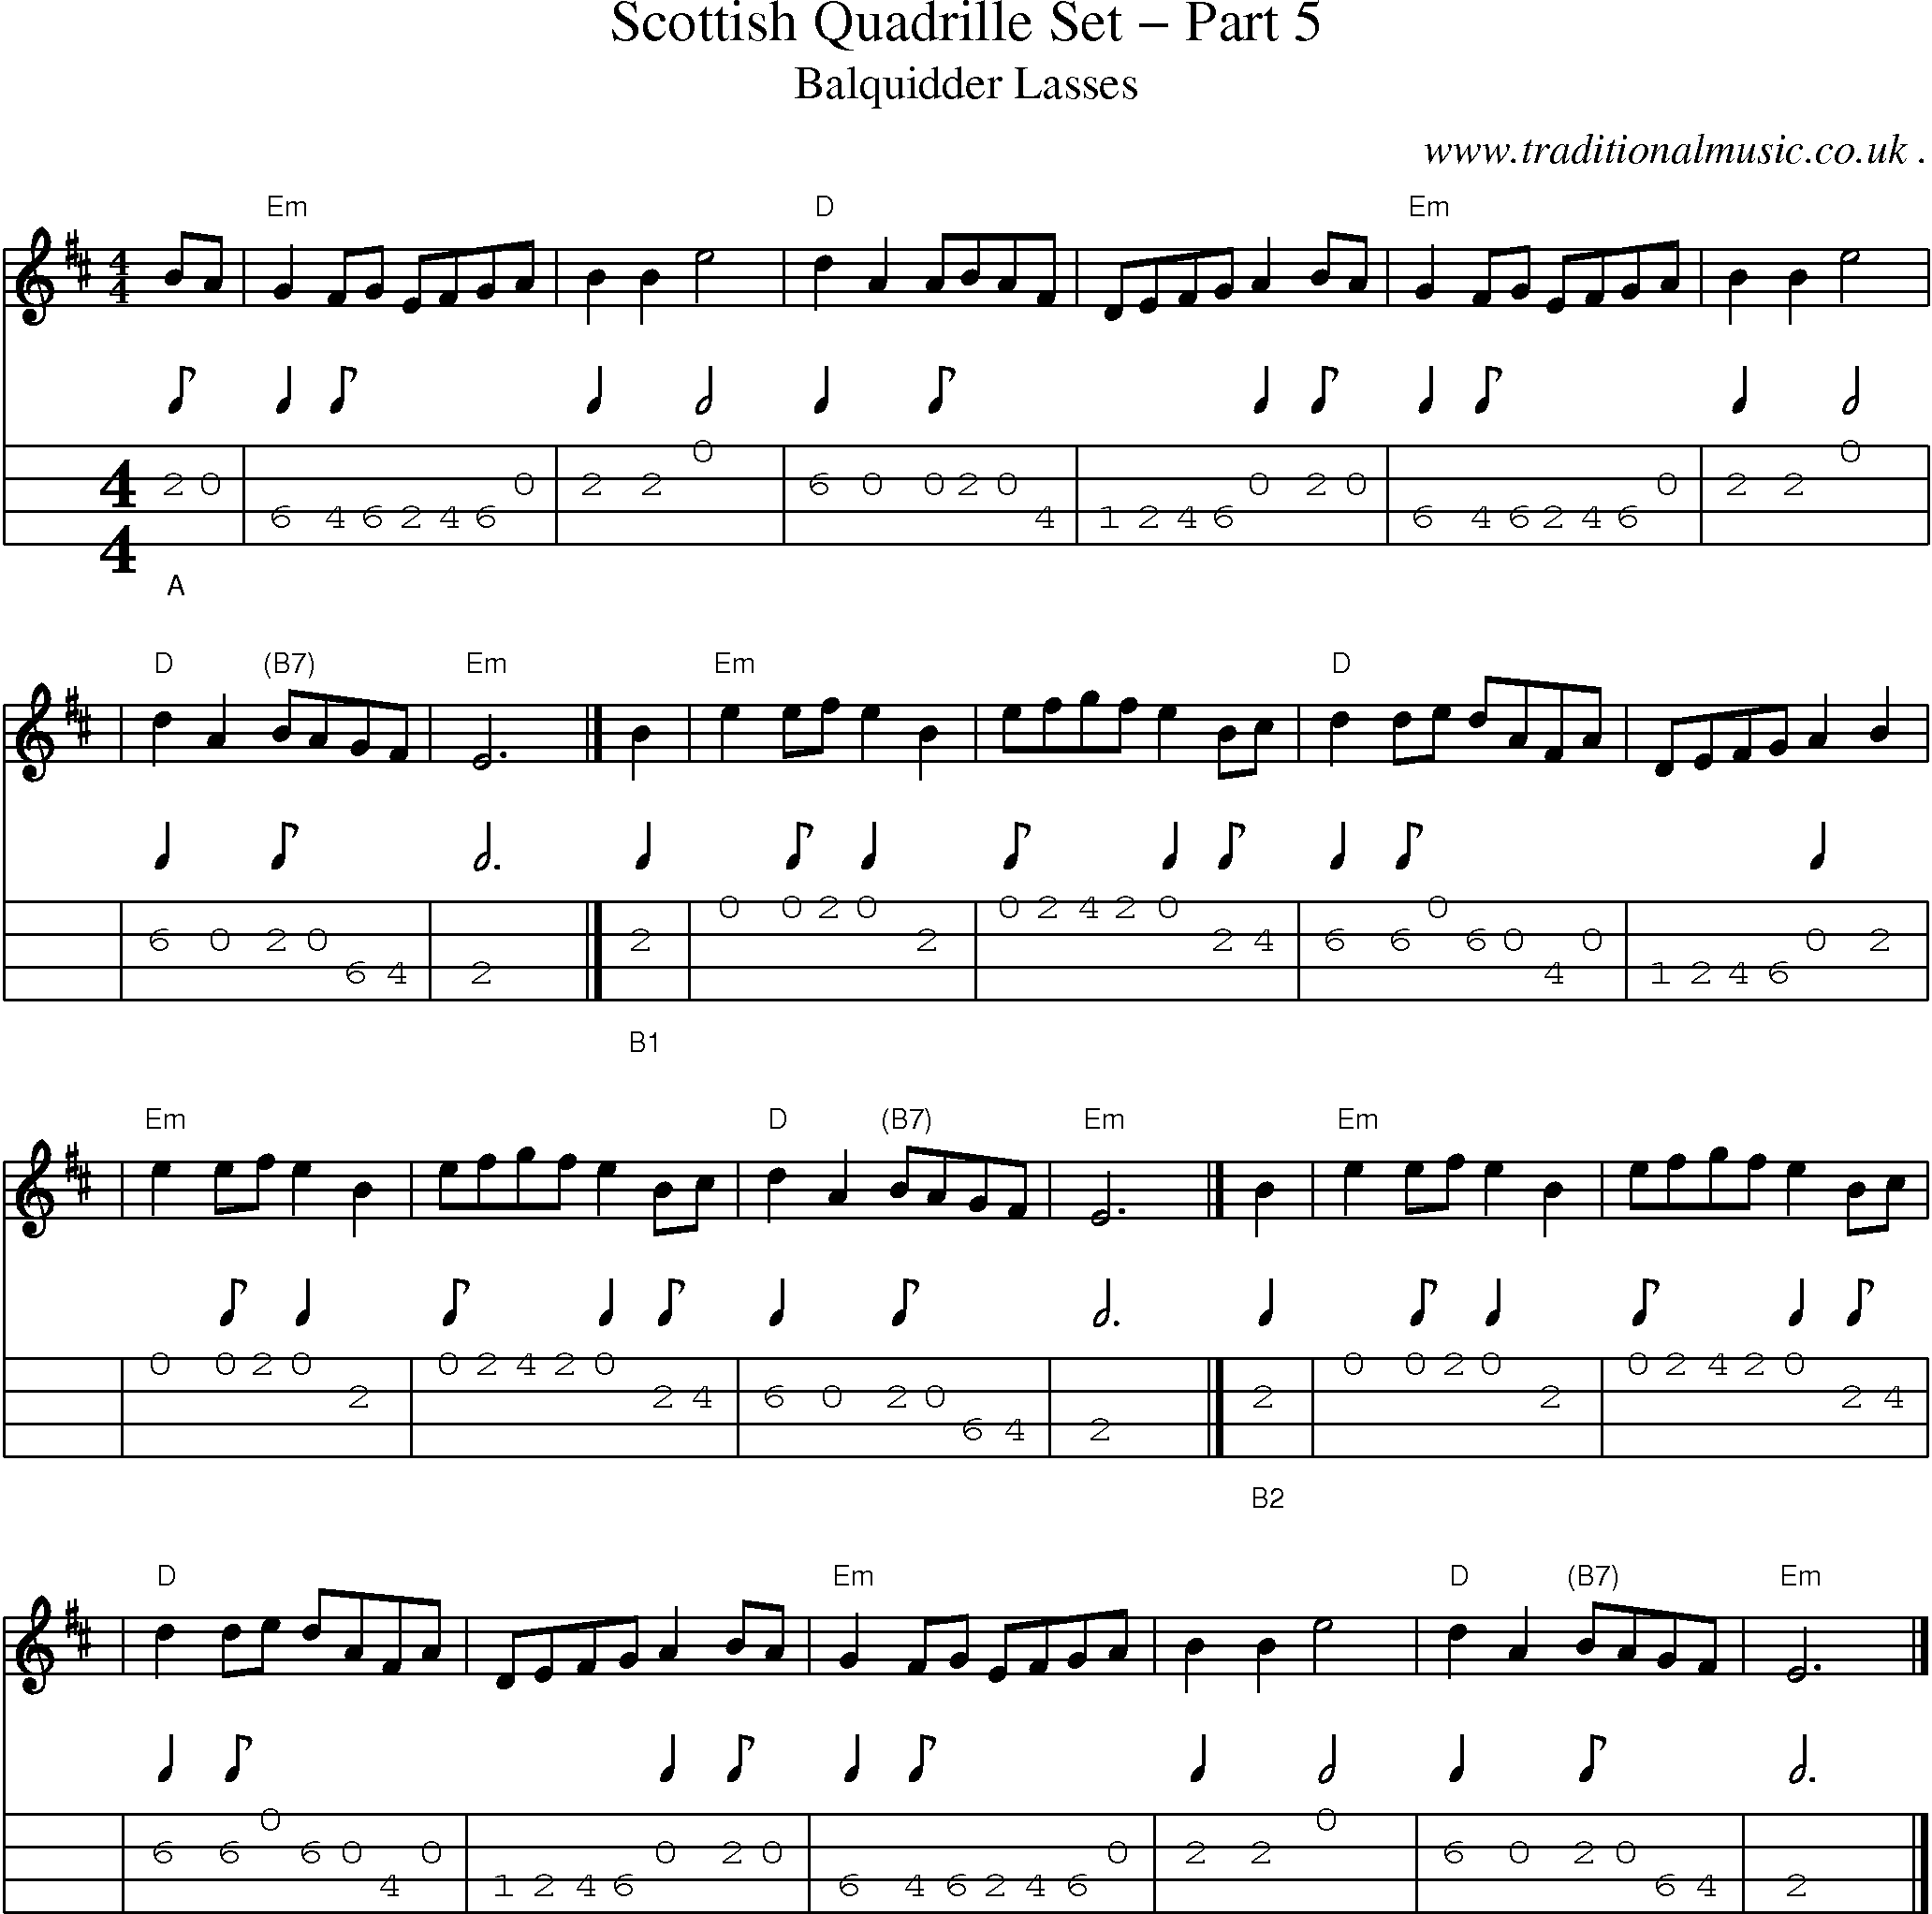 Sheet-music  score, Chords and Mandolin Tabs for Scottish Quadrille Set Part 5